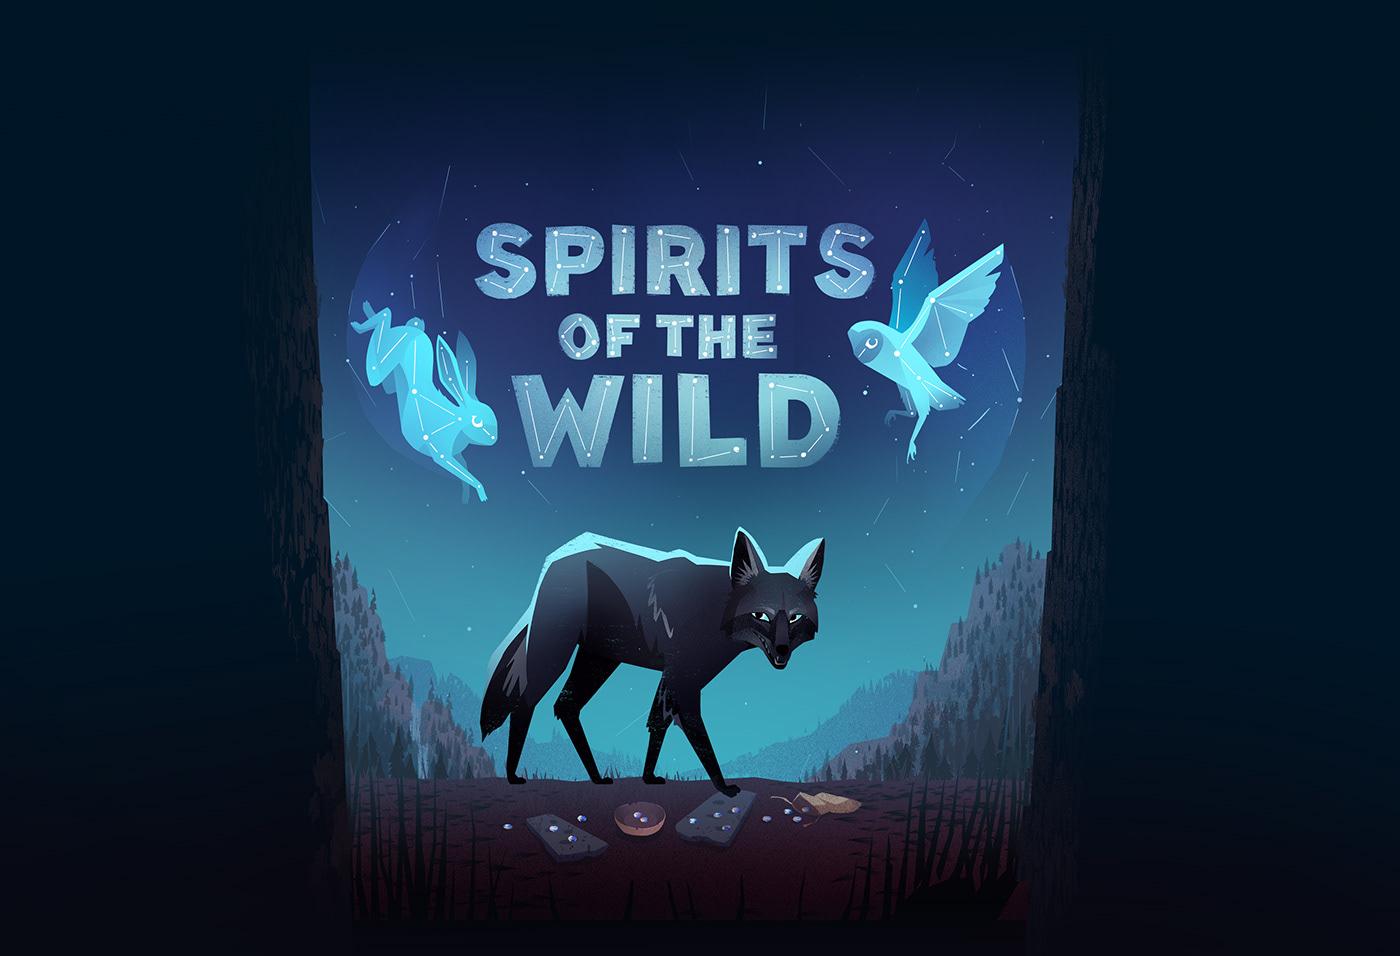 Spirits of the wild